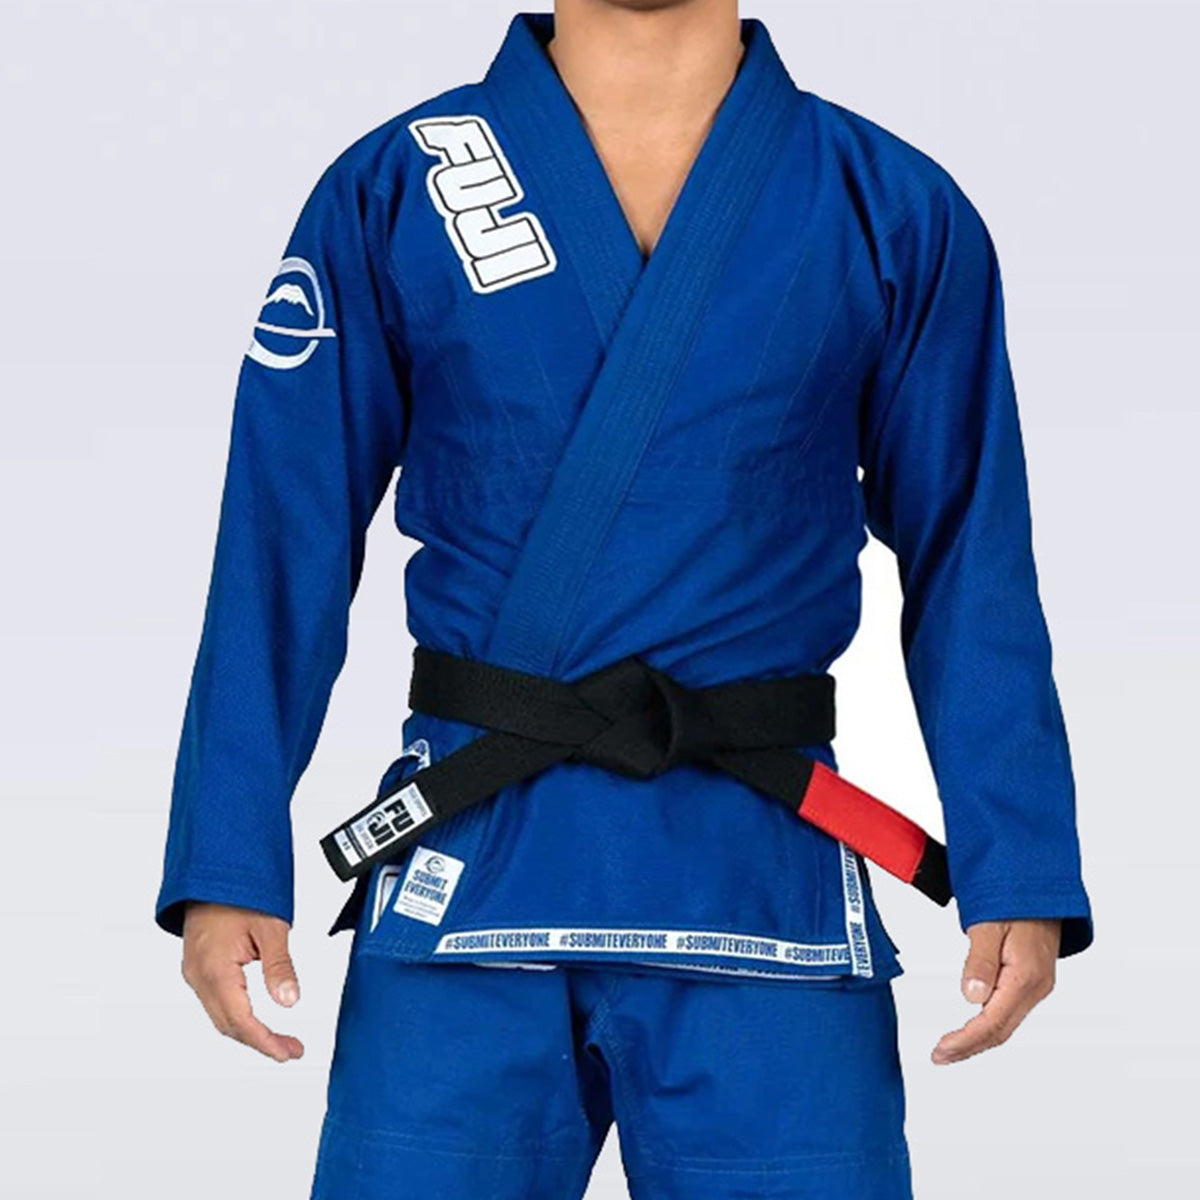 Fuji Judo Uniforms  Gis for sale  eBay